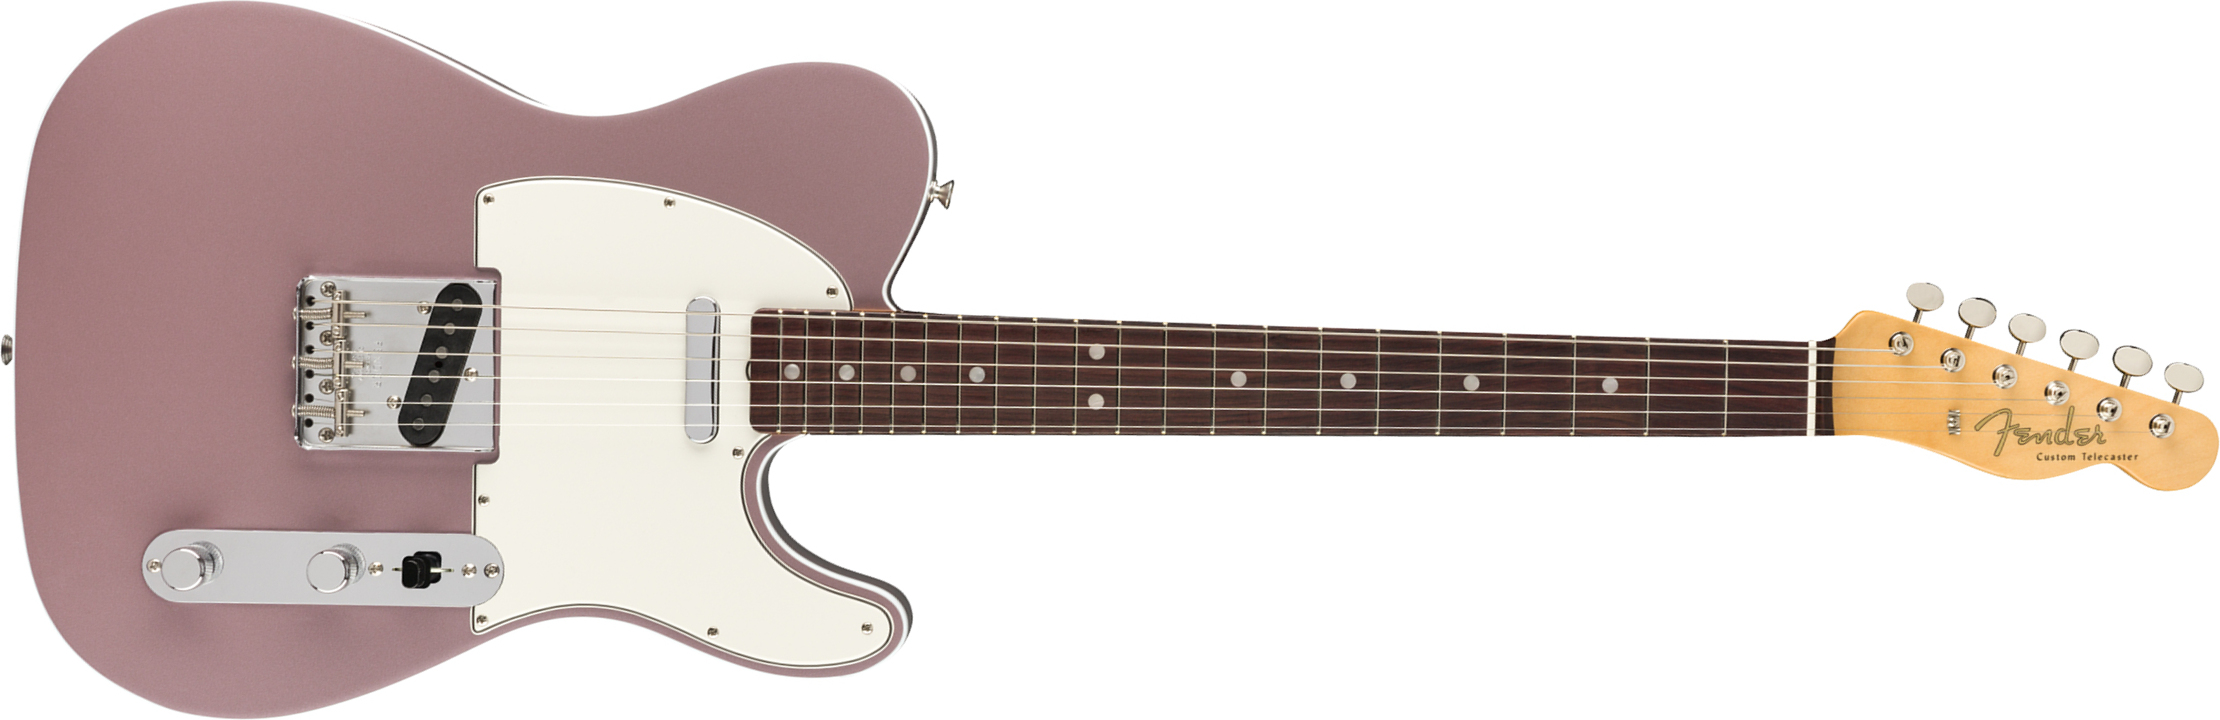 Fender Tele '60s American Original Usa Ss Rw - Burgundy Mist Metallic - Tel shape electric guitar - Main picture